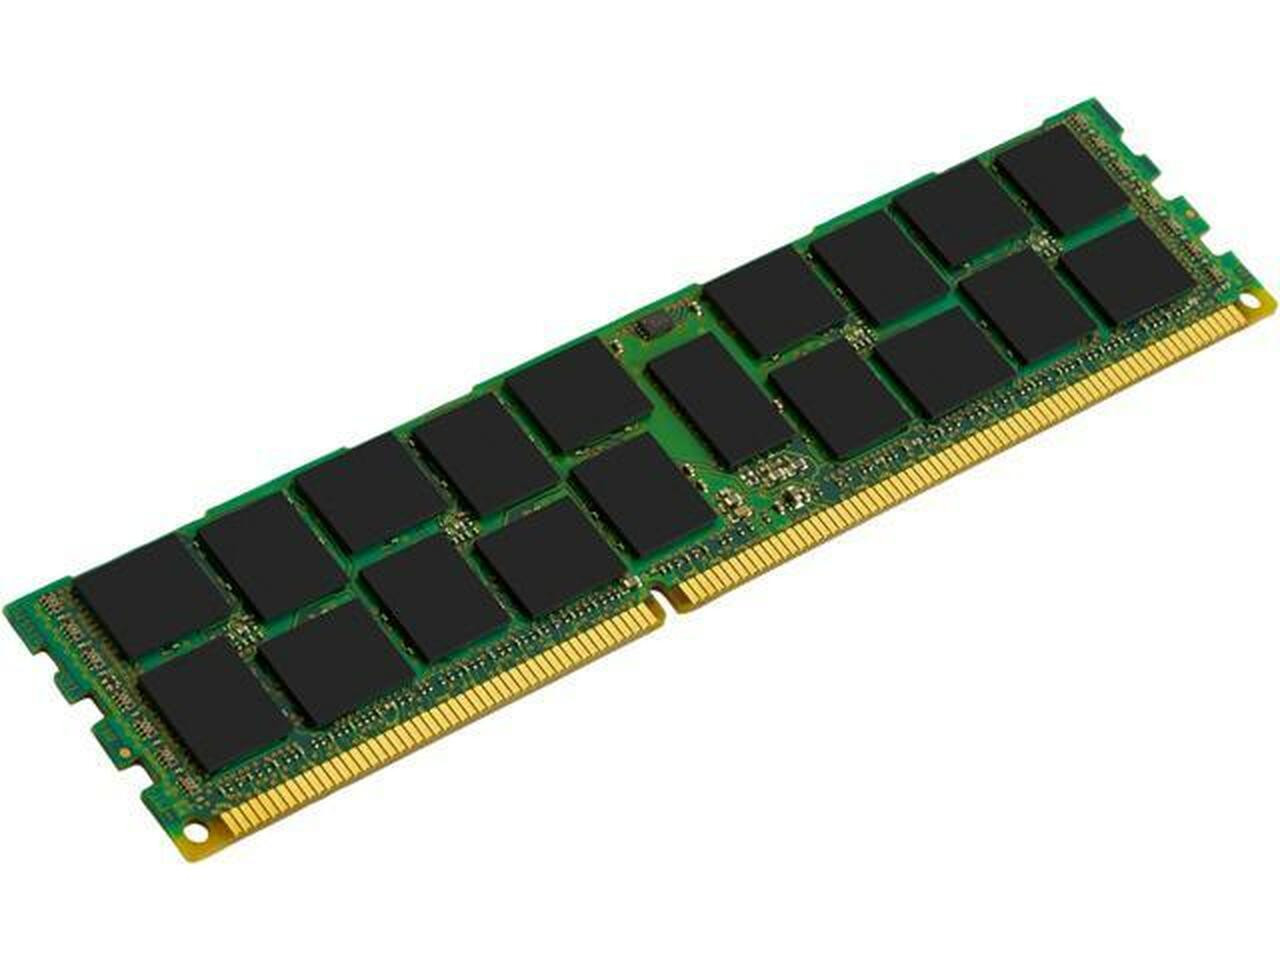 Netpatibles 8GB DDR4 SDRAM Memory Module - MEMDR480LCL01ER29NPM